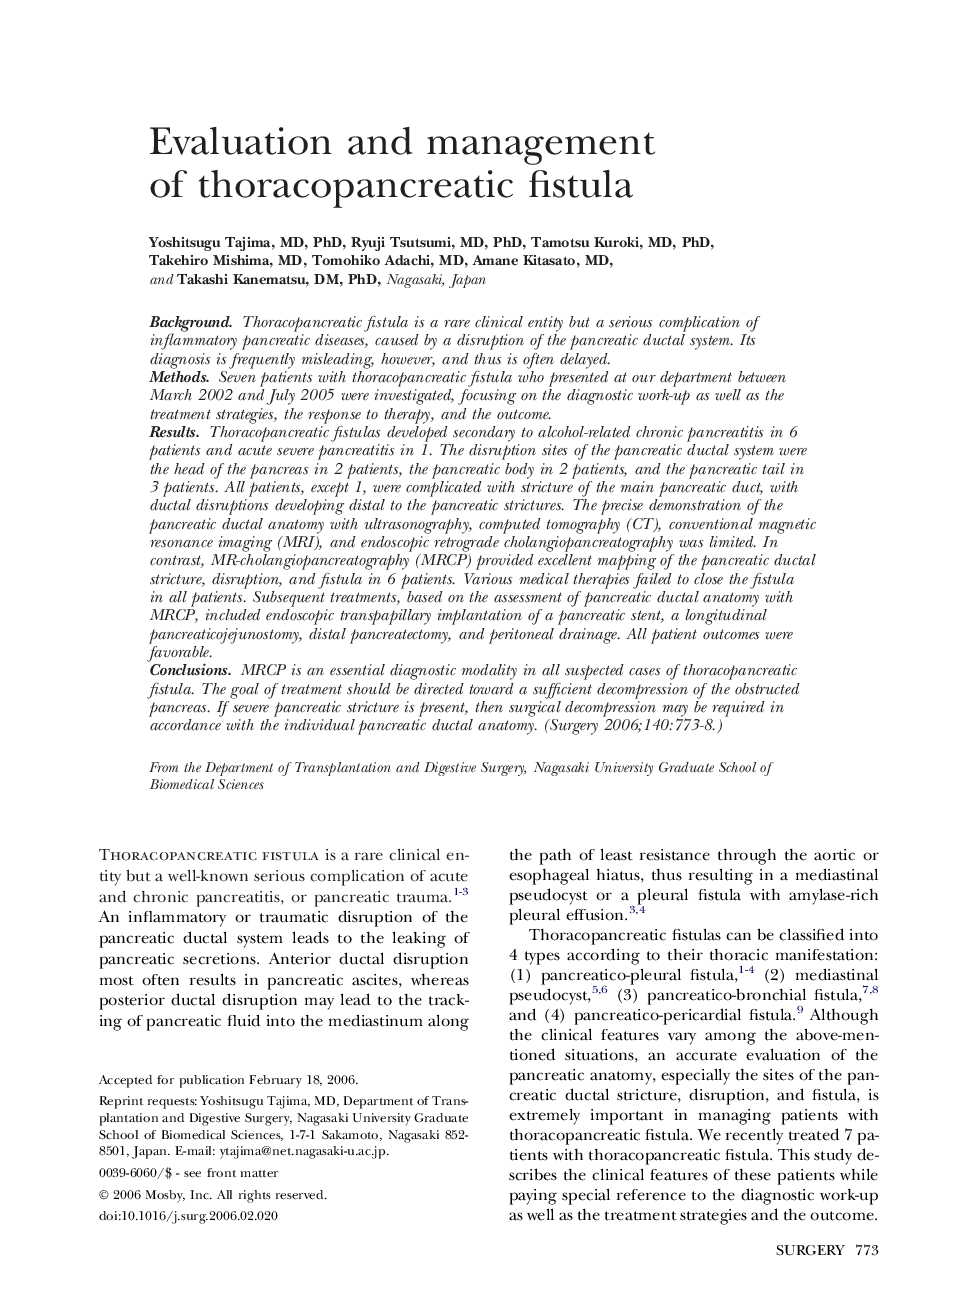 Evaluation and management of thoracopancreatic fistula